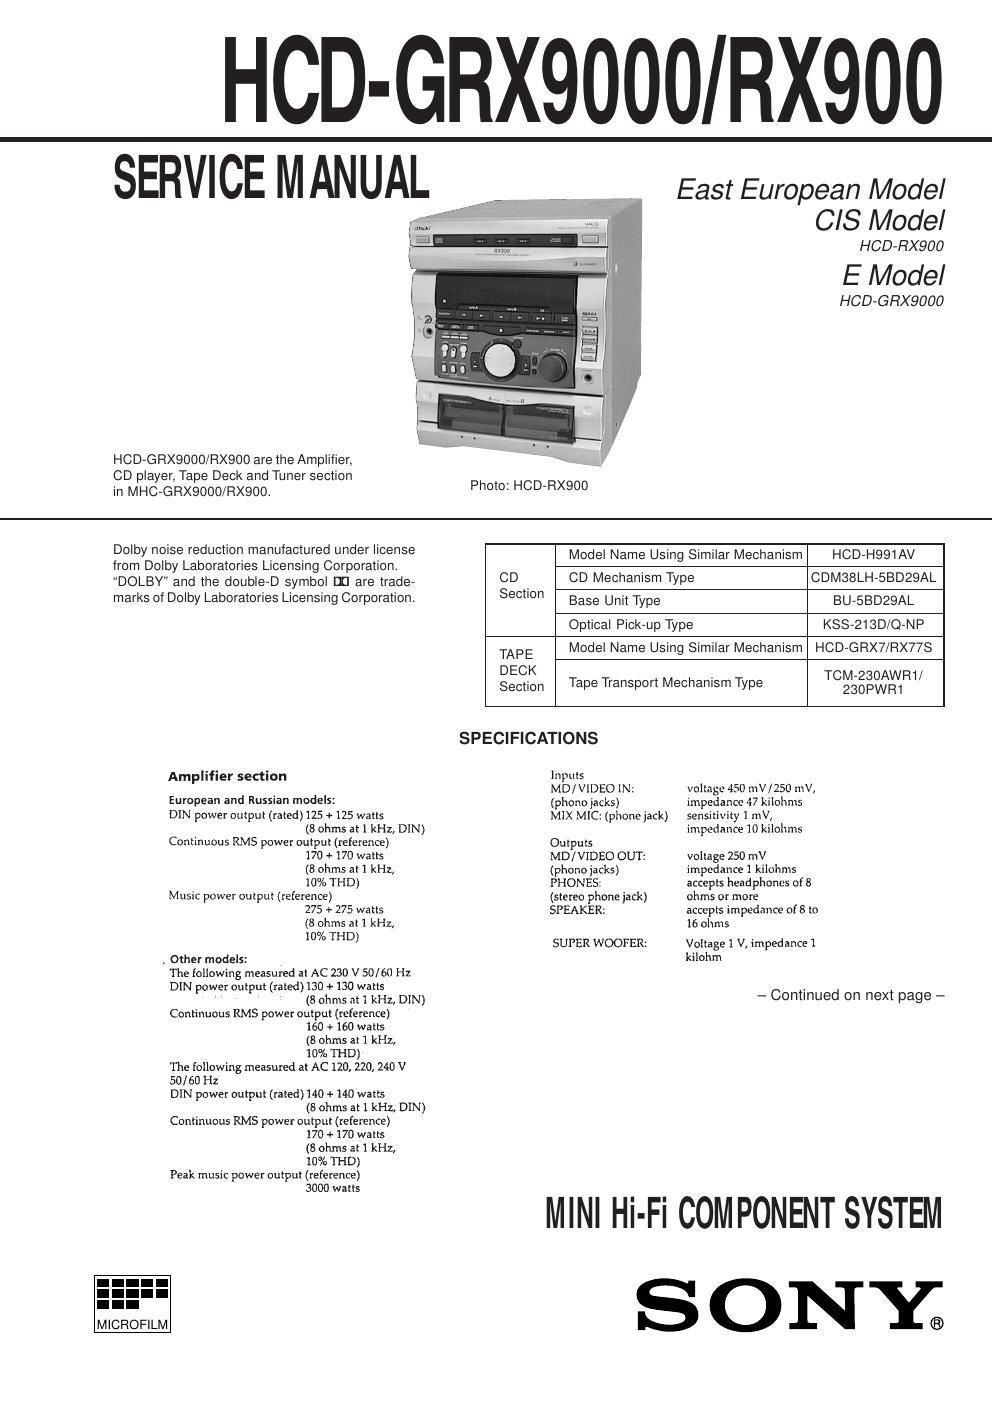 sony hcd grx 9000 service manual